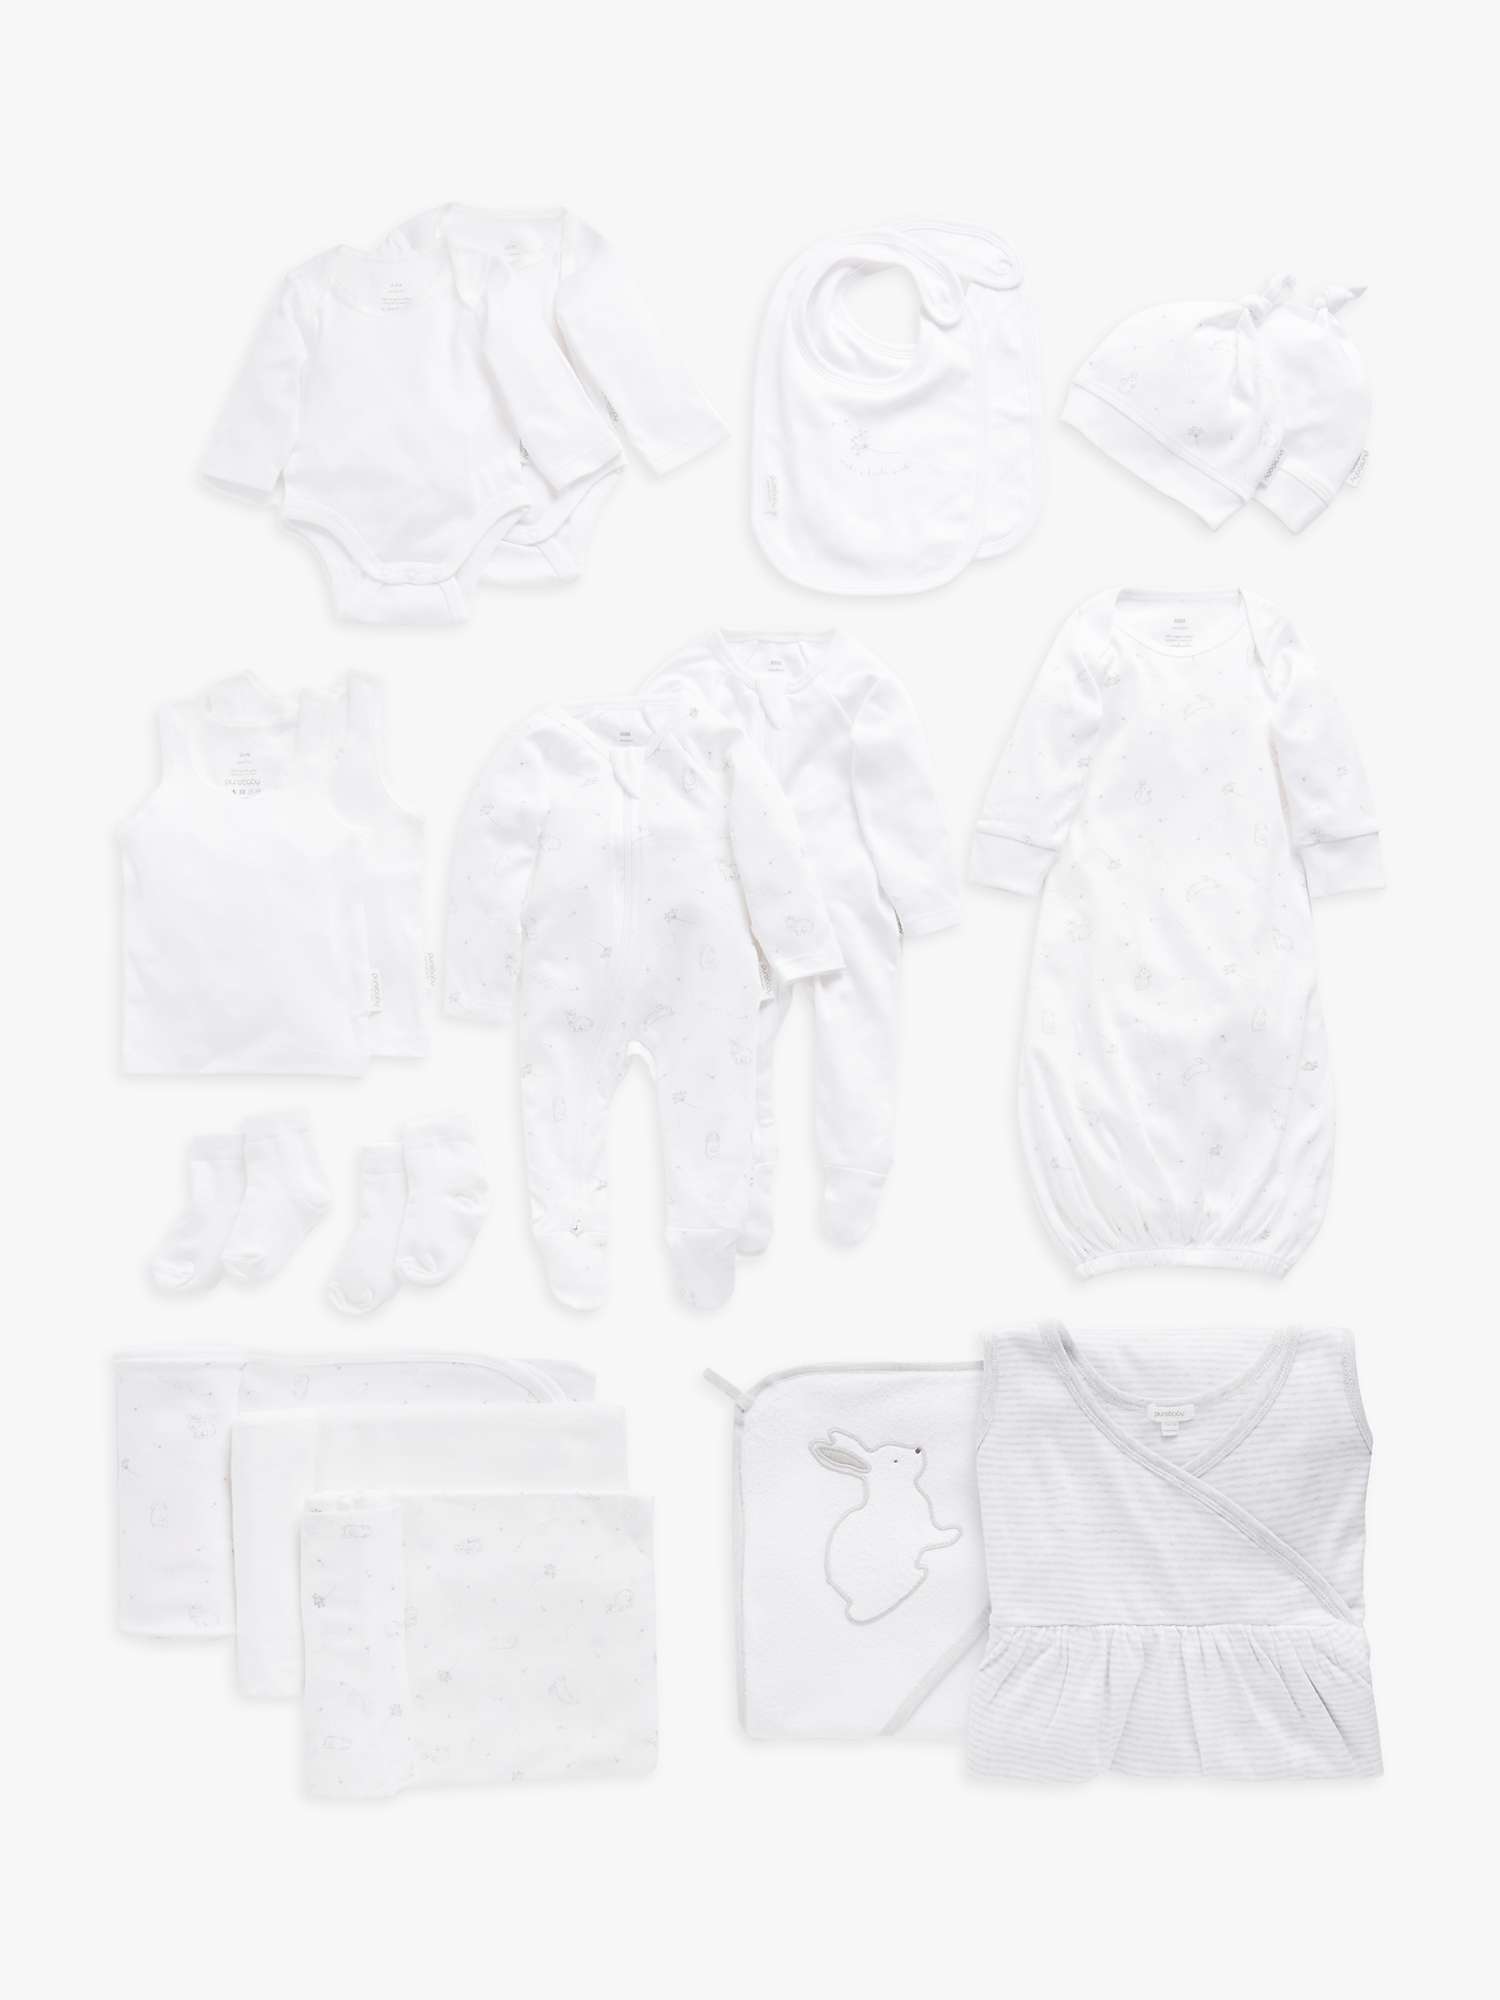 Buy Purebaby Organic Cotton Essentials Newborn Hospital Gift Set, Pack of 18, White Online at johnlewis.com